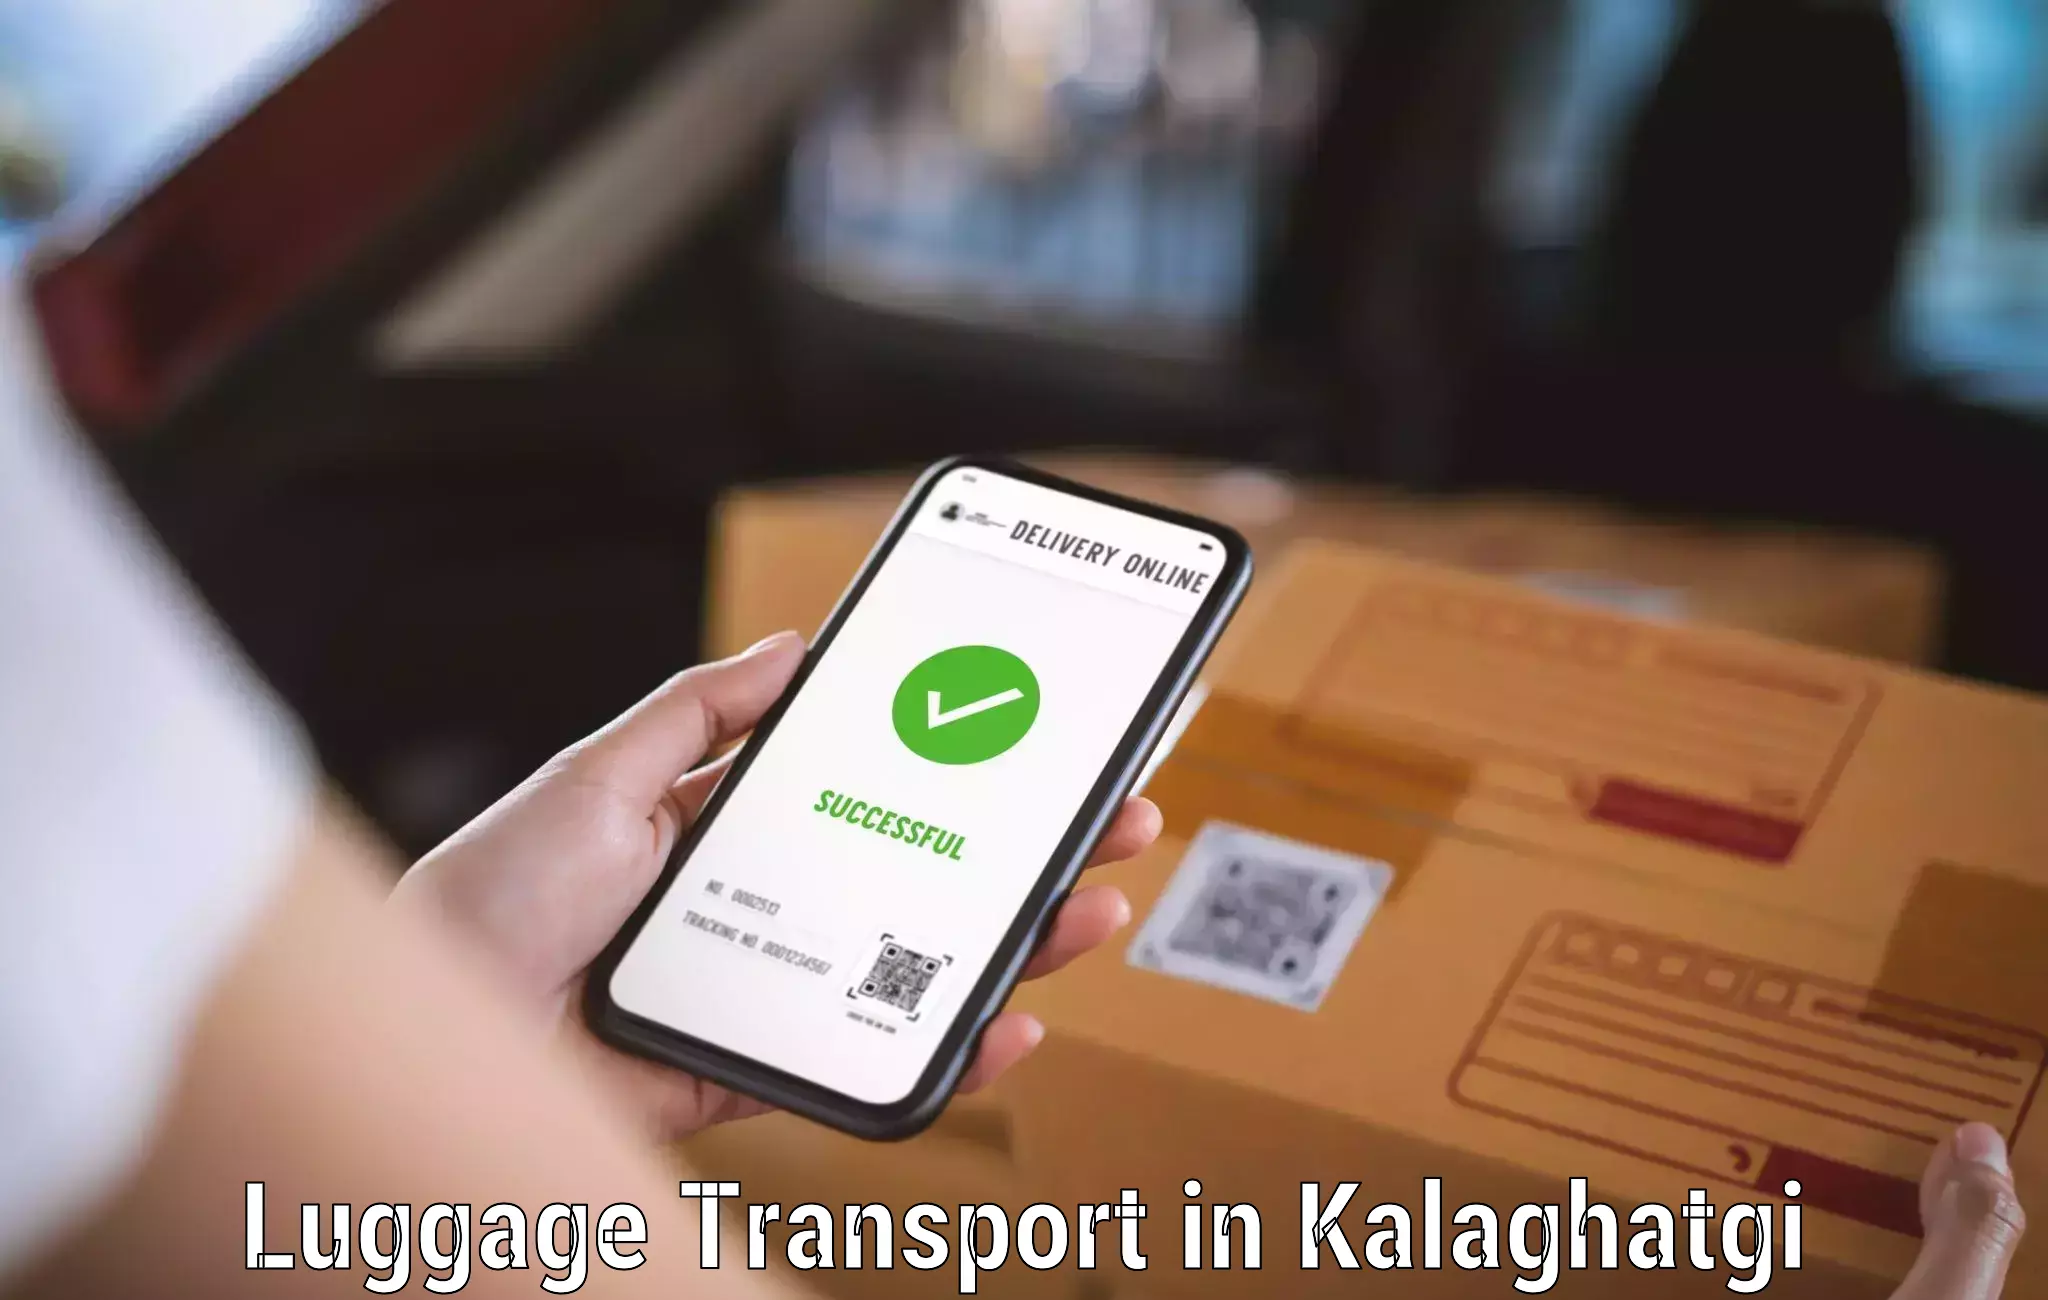 High-quality baggage shipment in Kalaghatgi